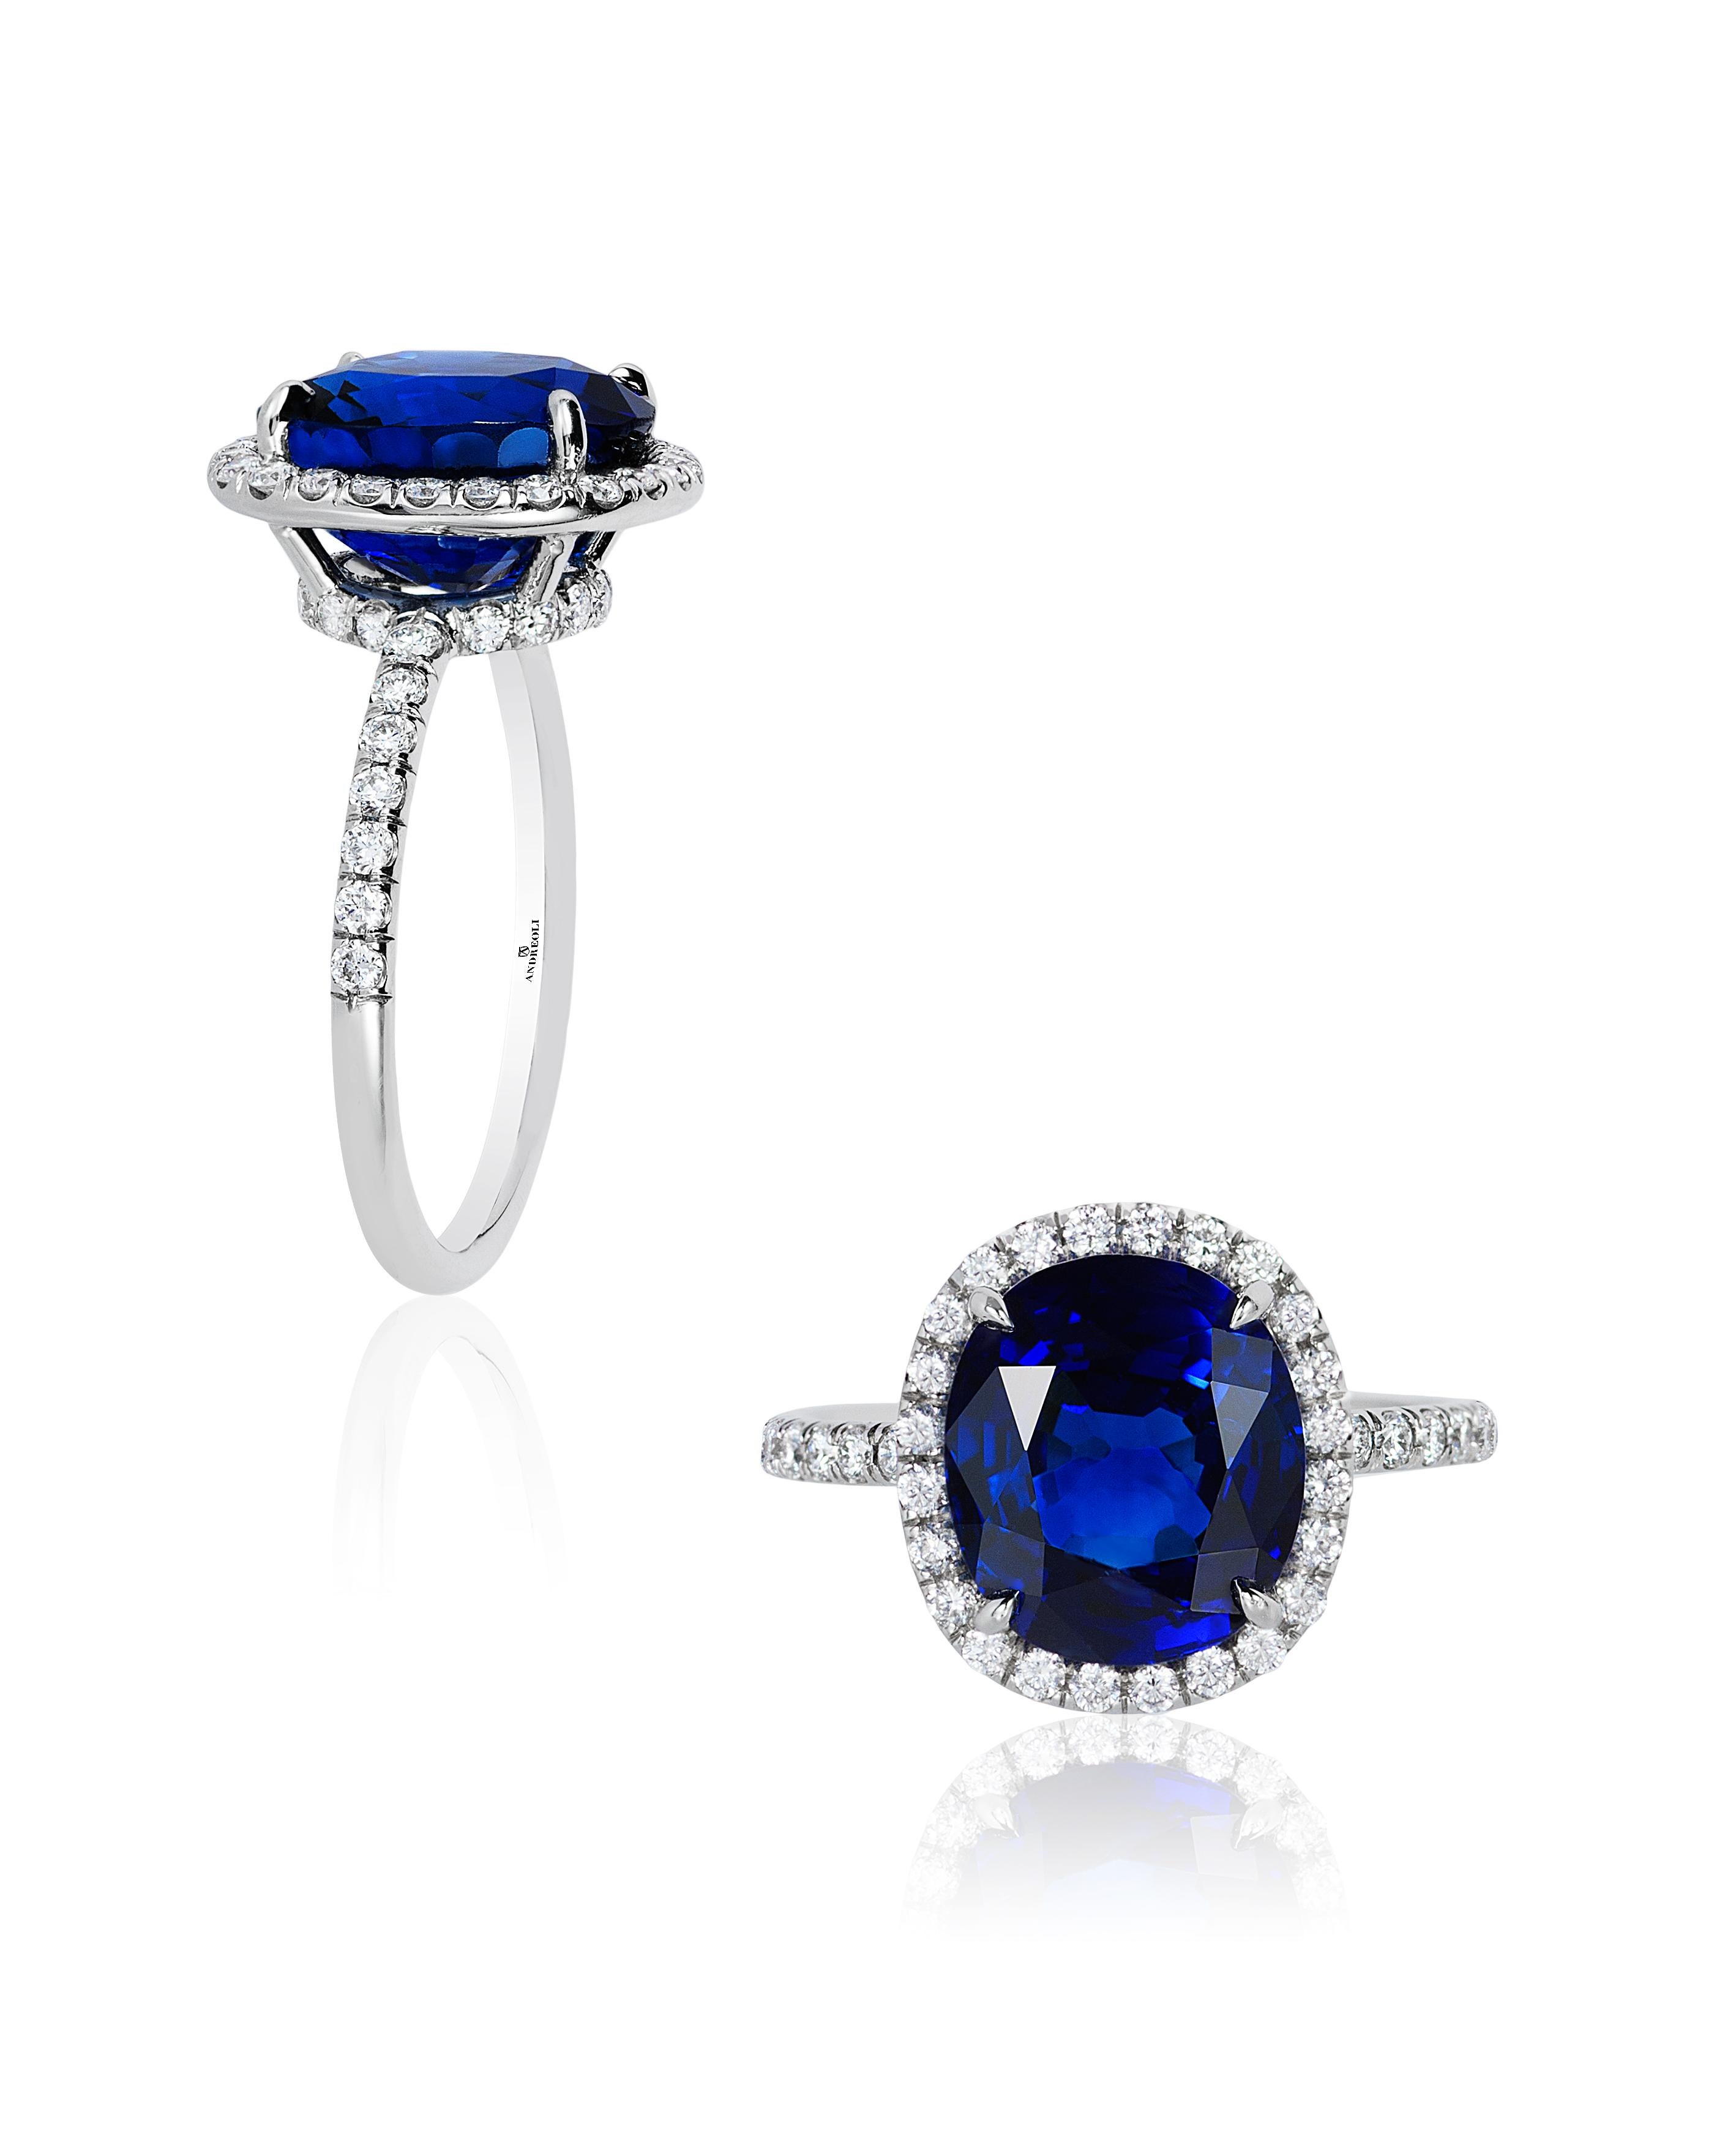 Contemporary Andreoli CDC Certified 6.31 Carat Ceylon Blue Sapphire Diamond Platinum Ring For Sale